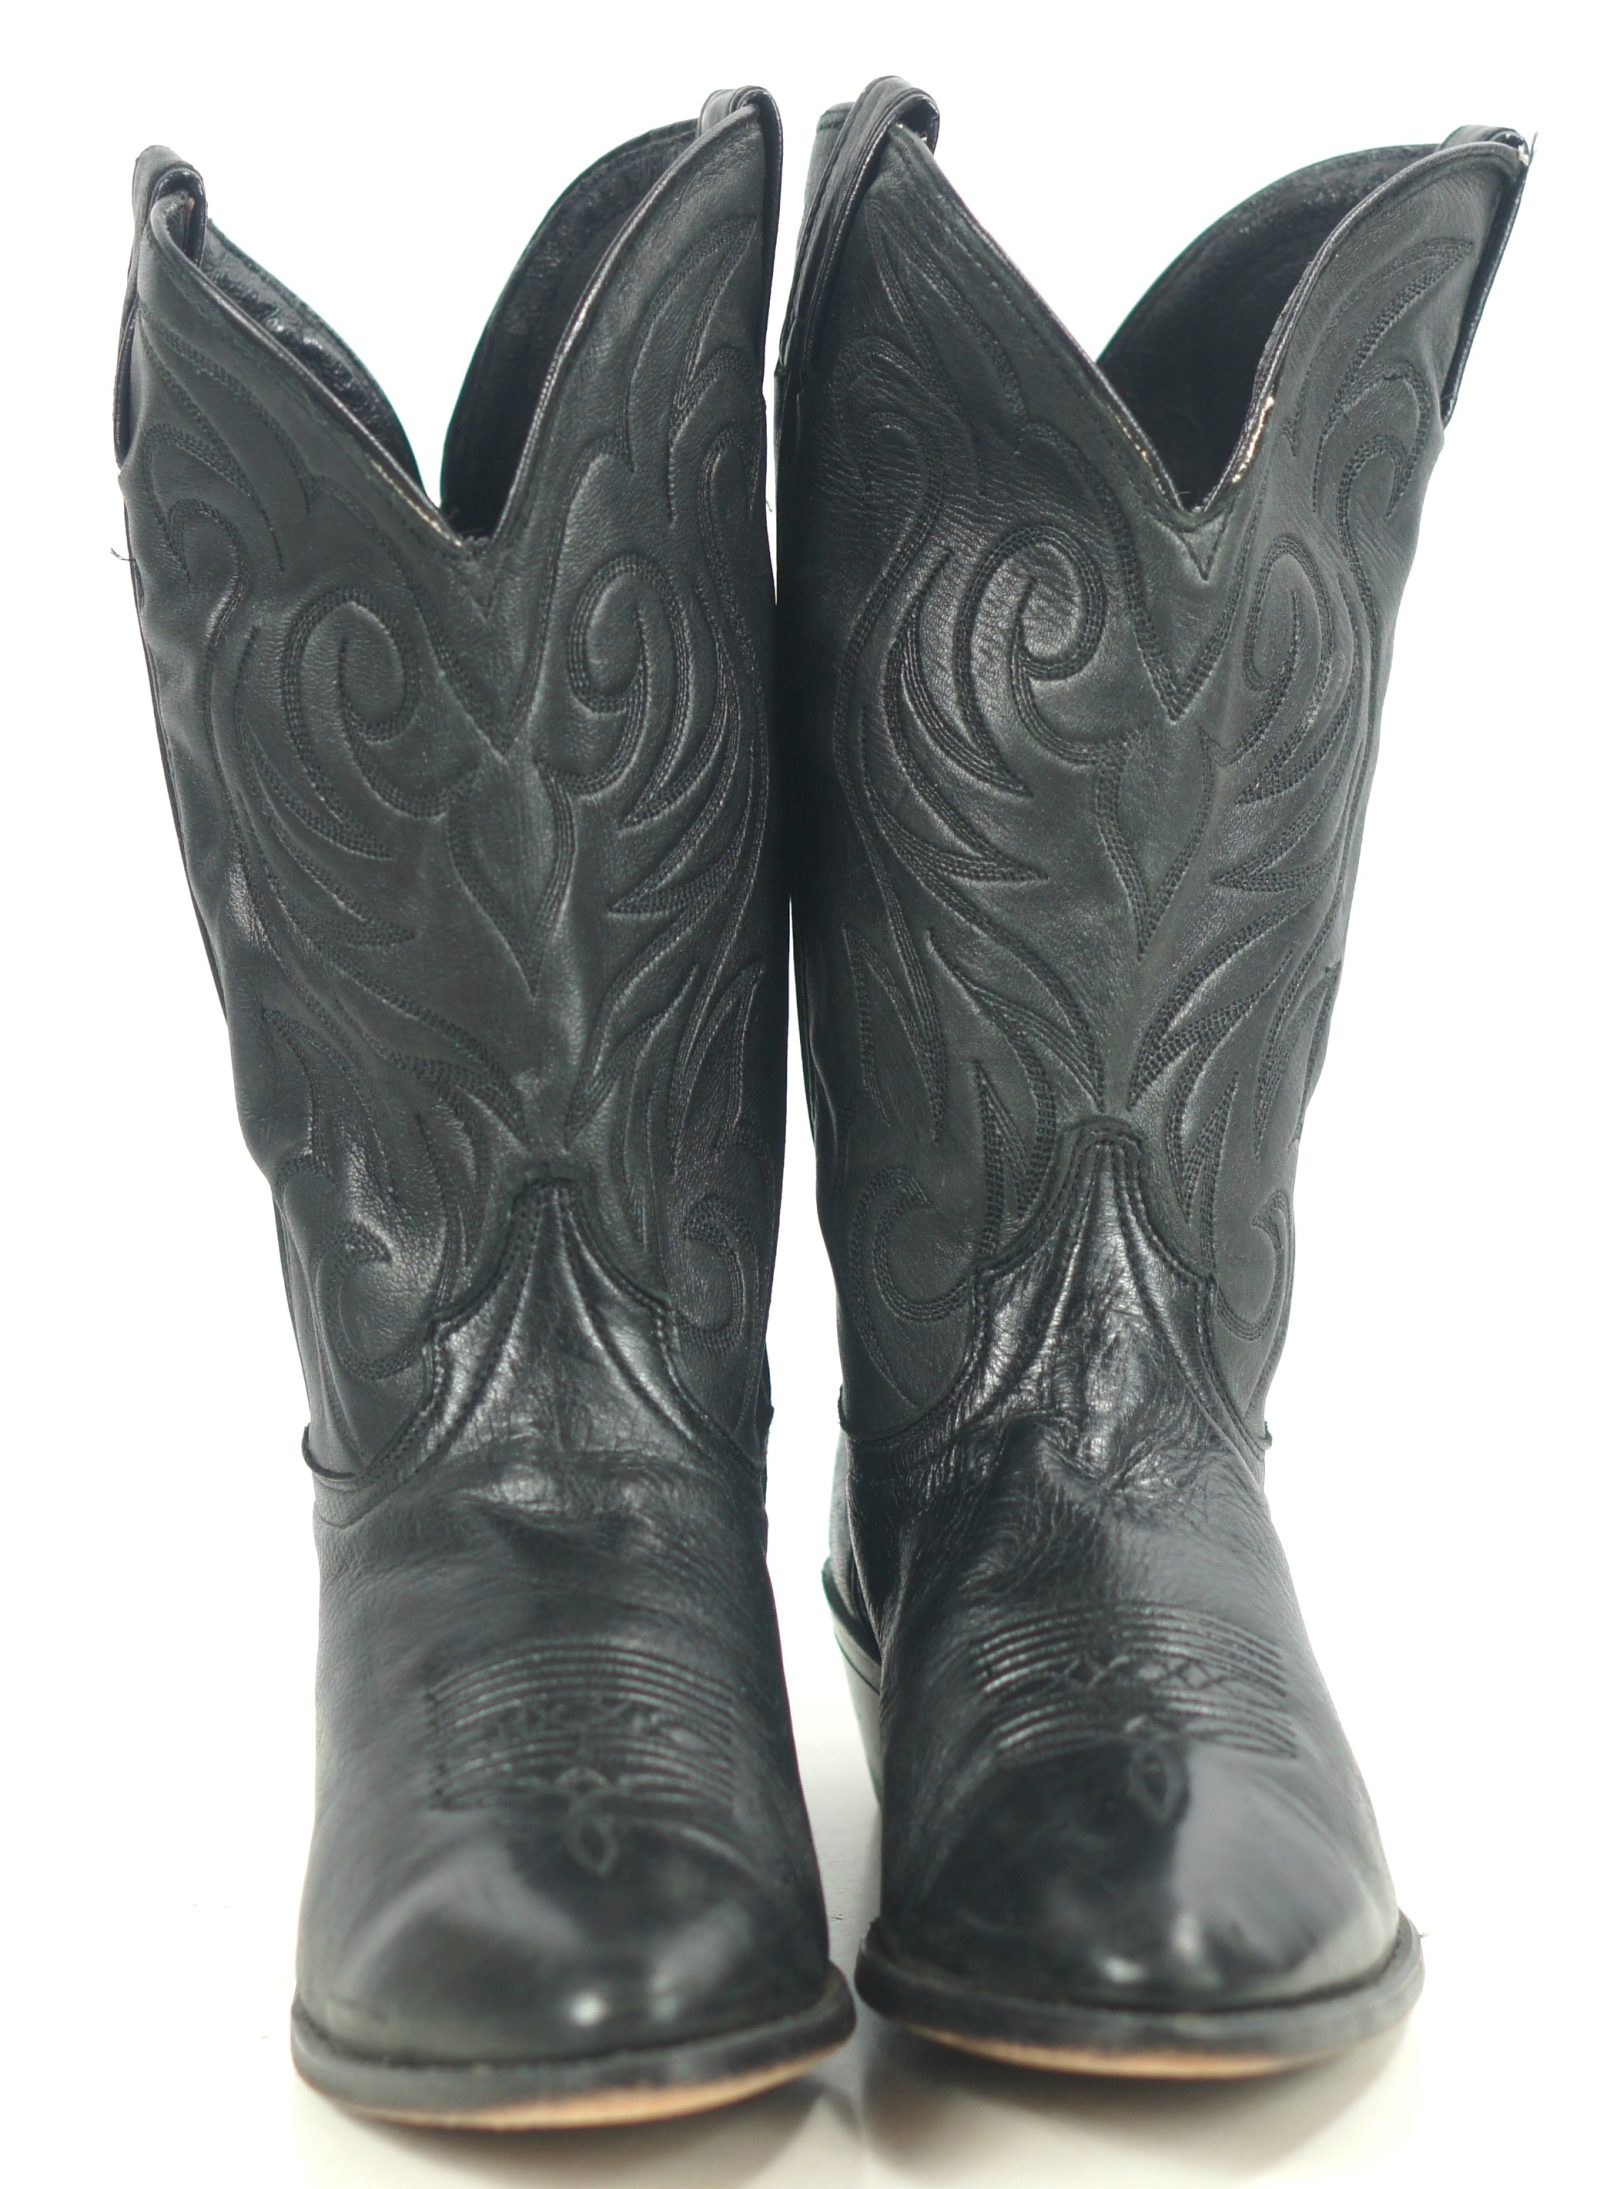 Laredo Black Leather Cowboy Western Riding Boots Vintage US Made Men's ...